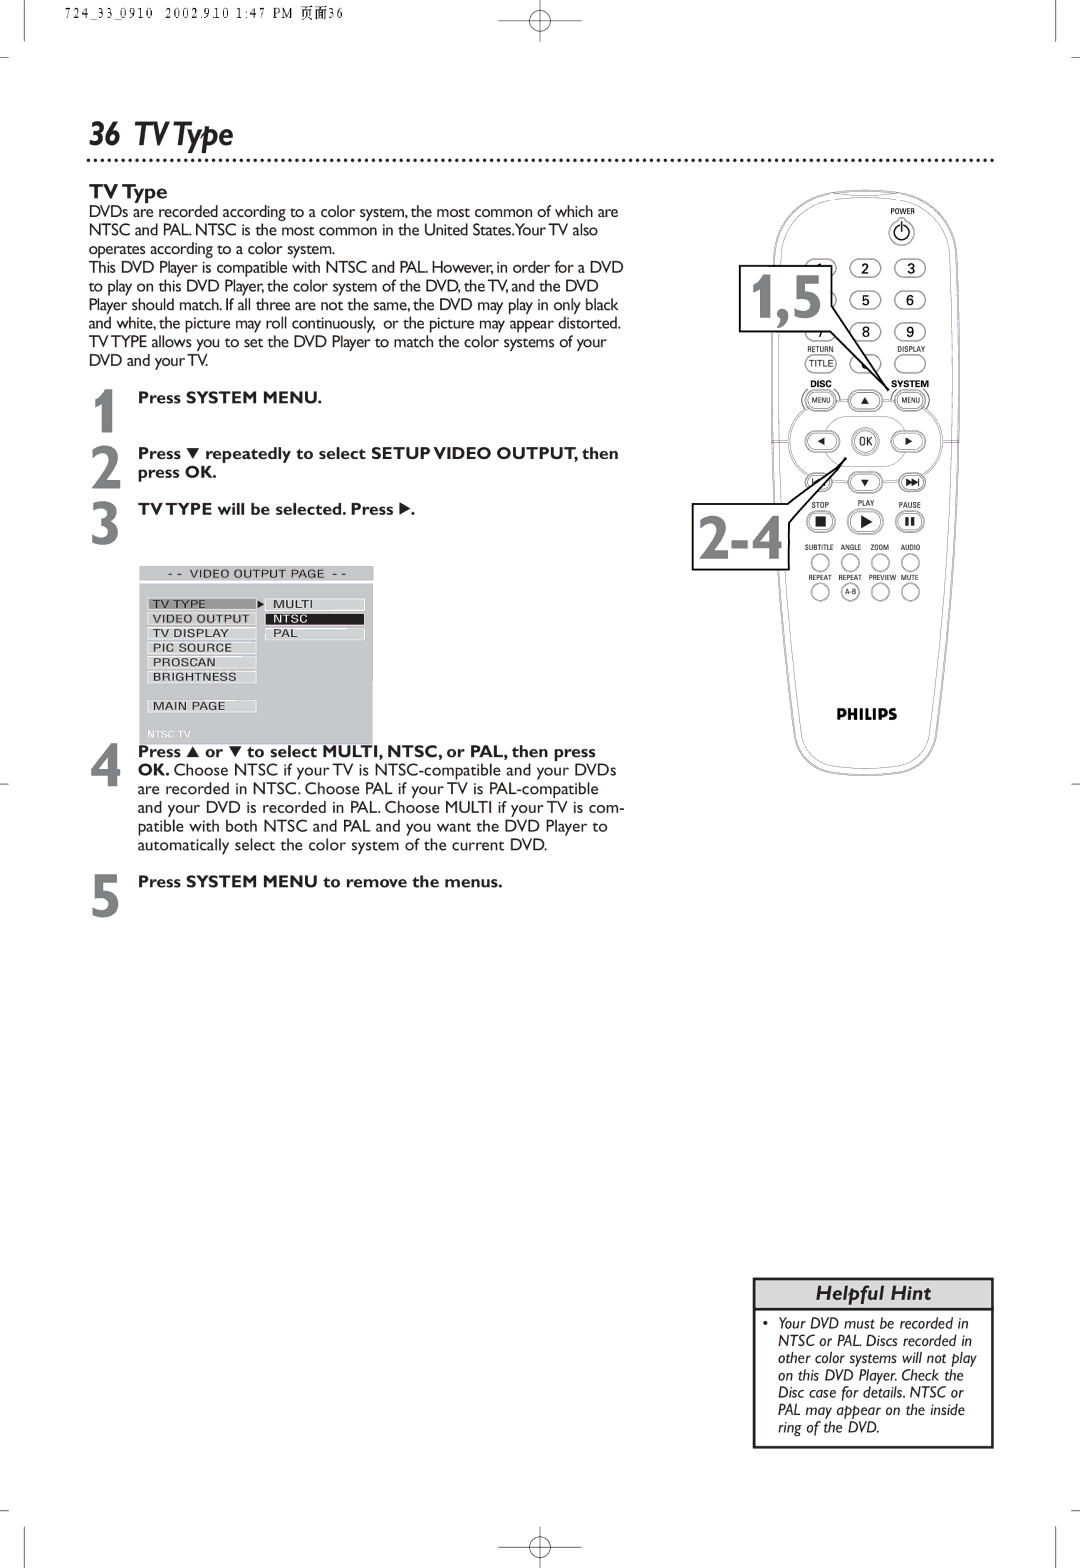 Philips DVD724P owner manual TVType, TV Type 